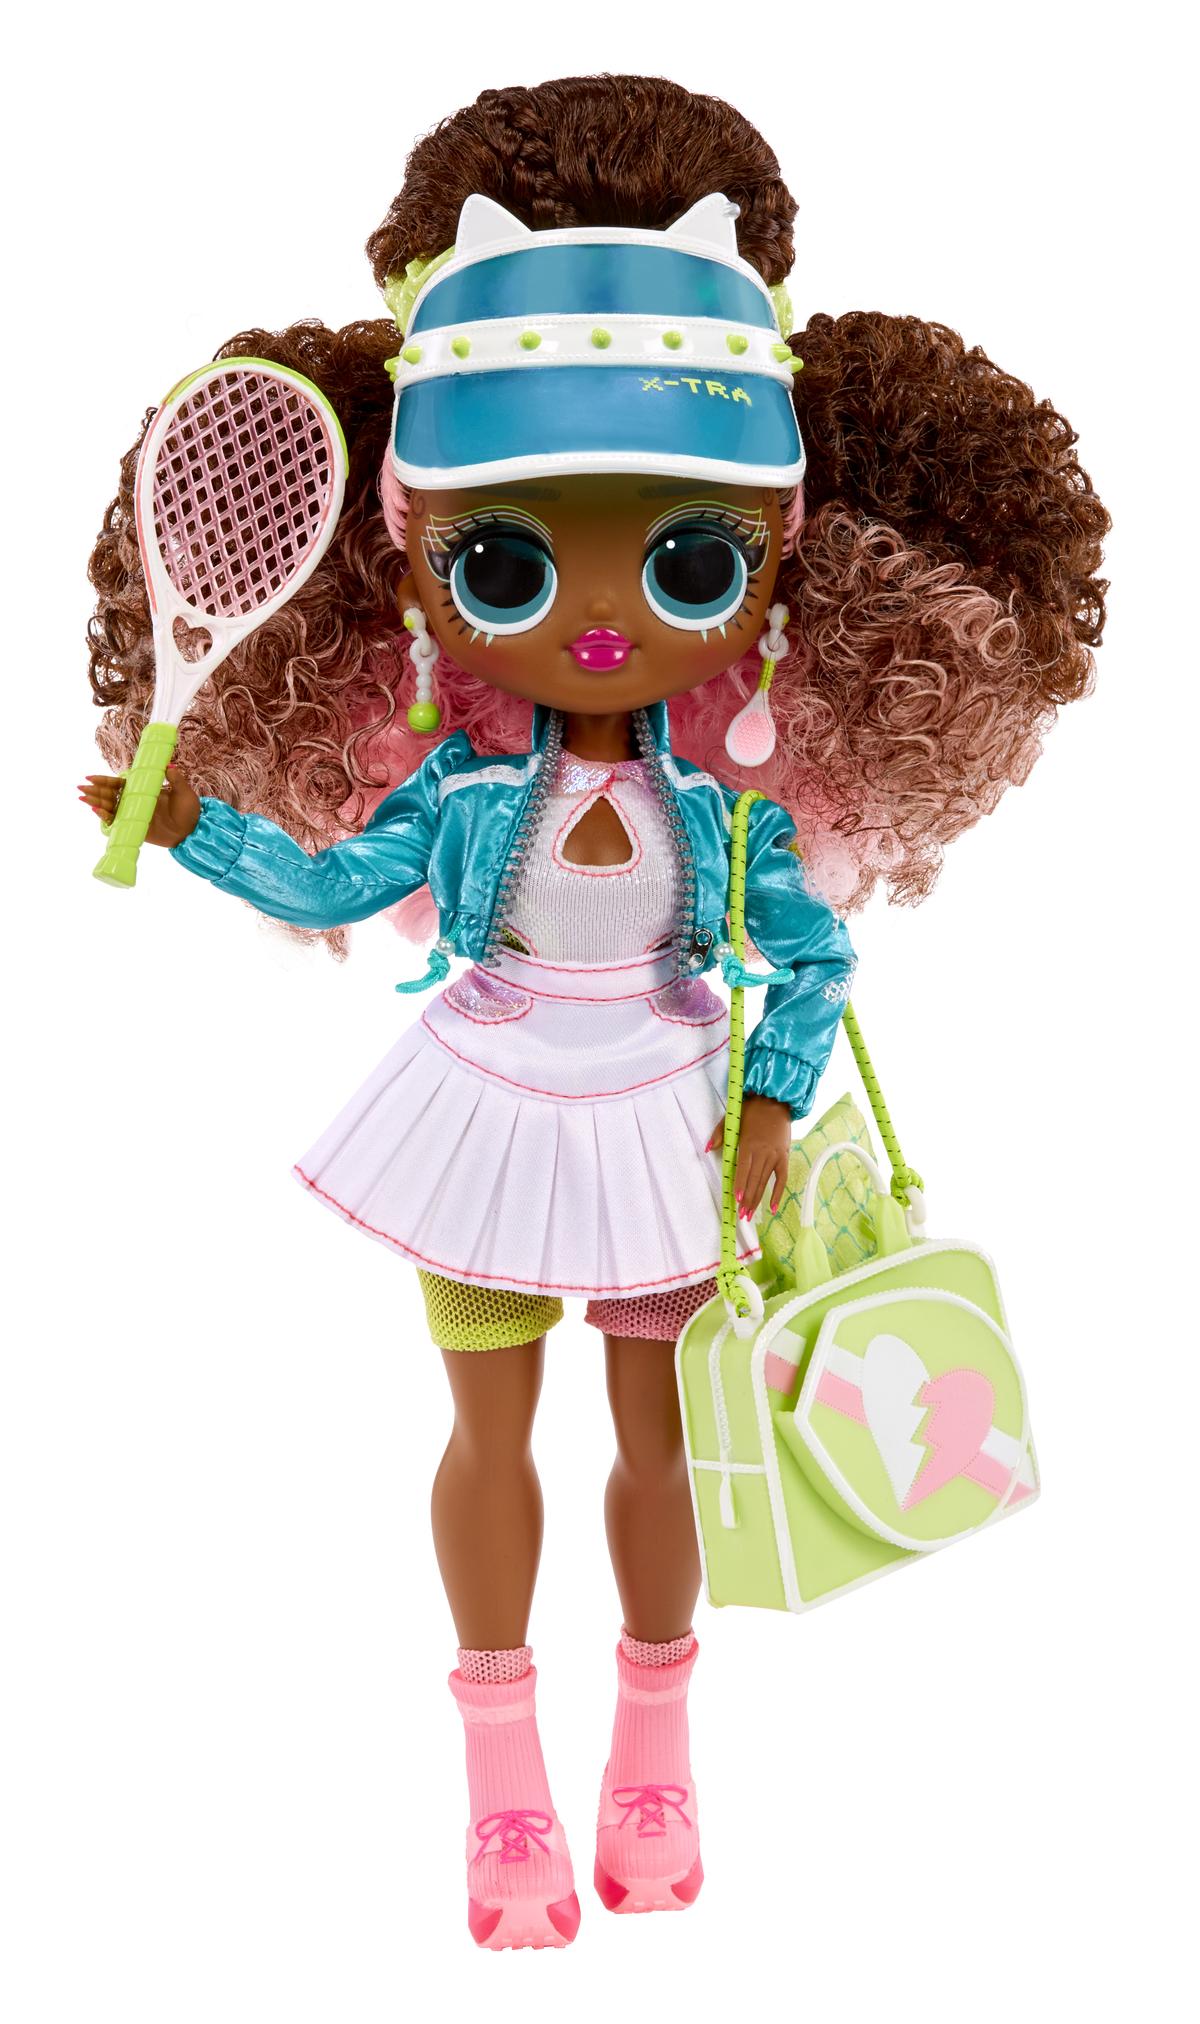 L.O.L. SURPRISE! OMG Sports Doll Cutie Court S3- Puppen Mehrfarbig